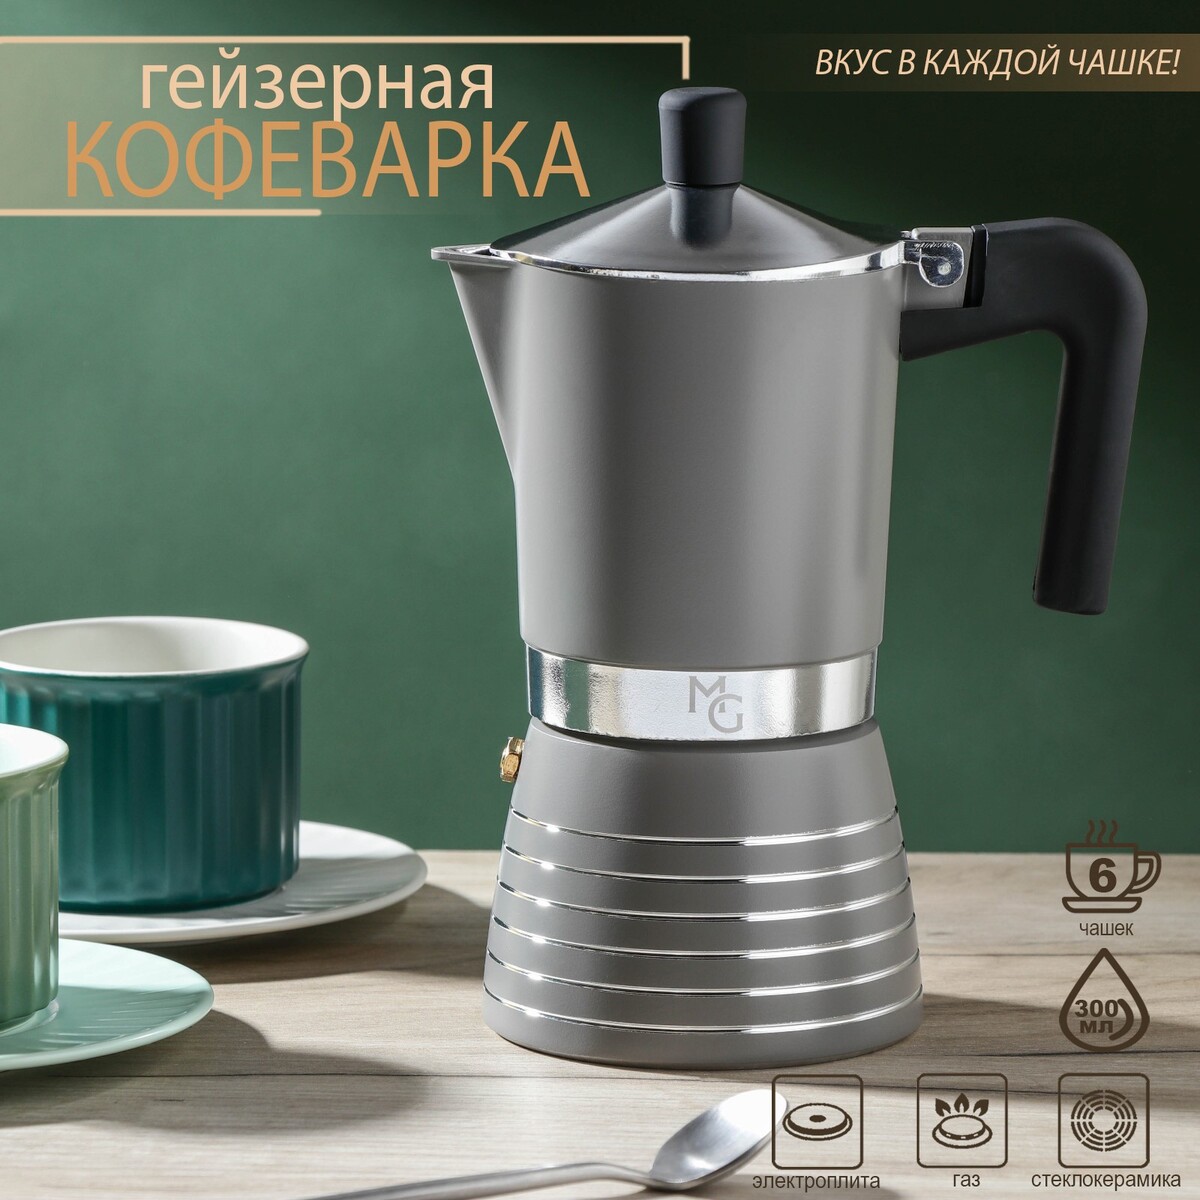 Кофеварка гейзерная magistro moka, на 6 чашек, 300 мл гейзерная кофеварка на 6 чашек wmf kult